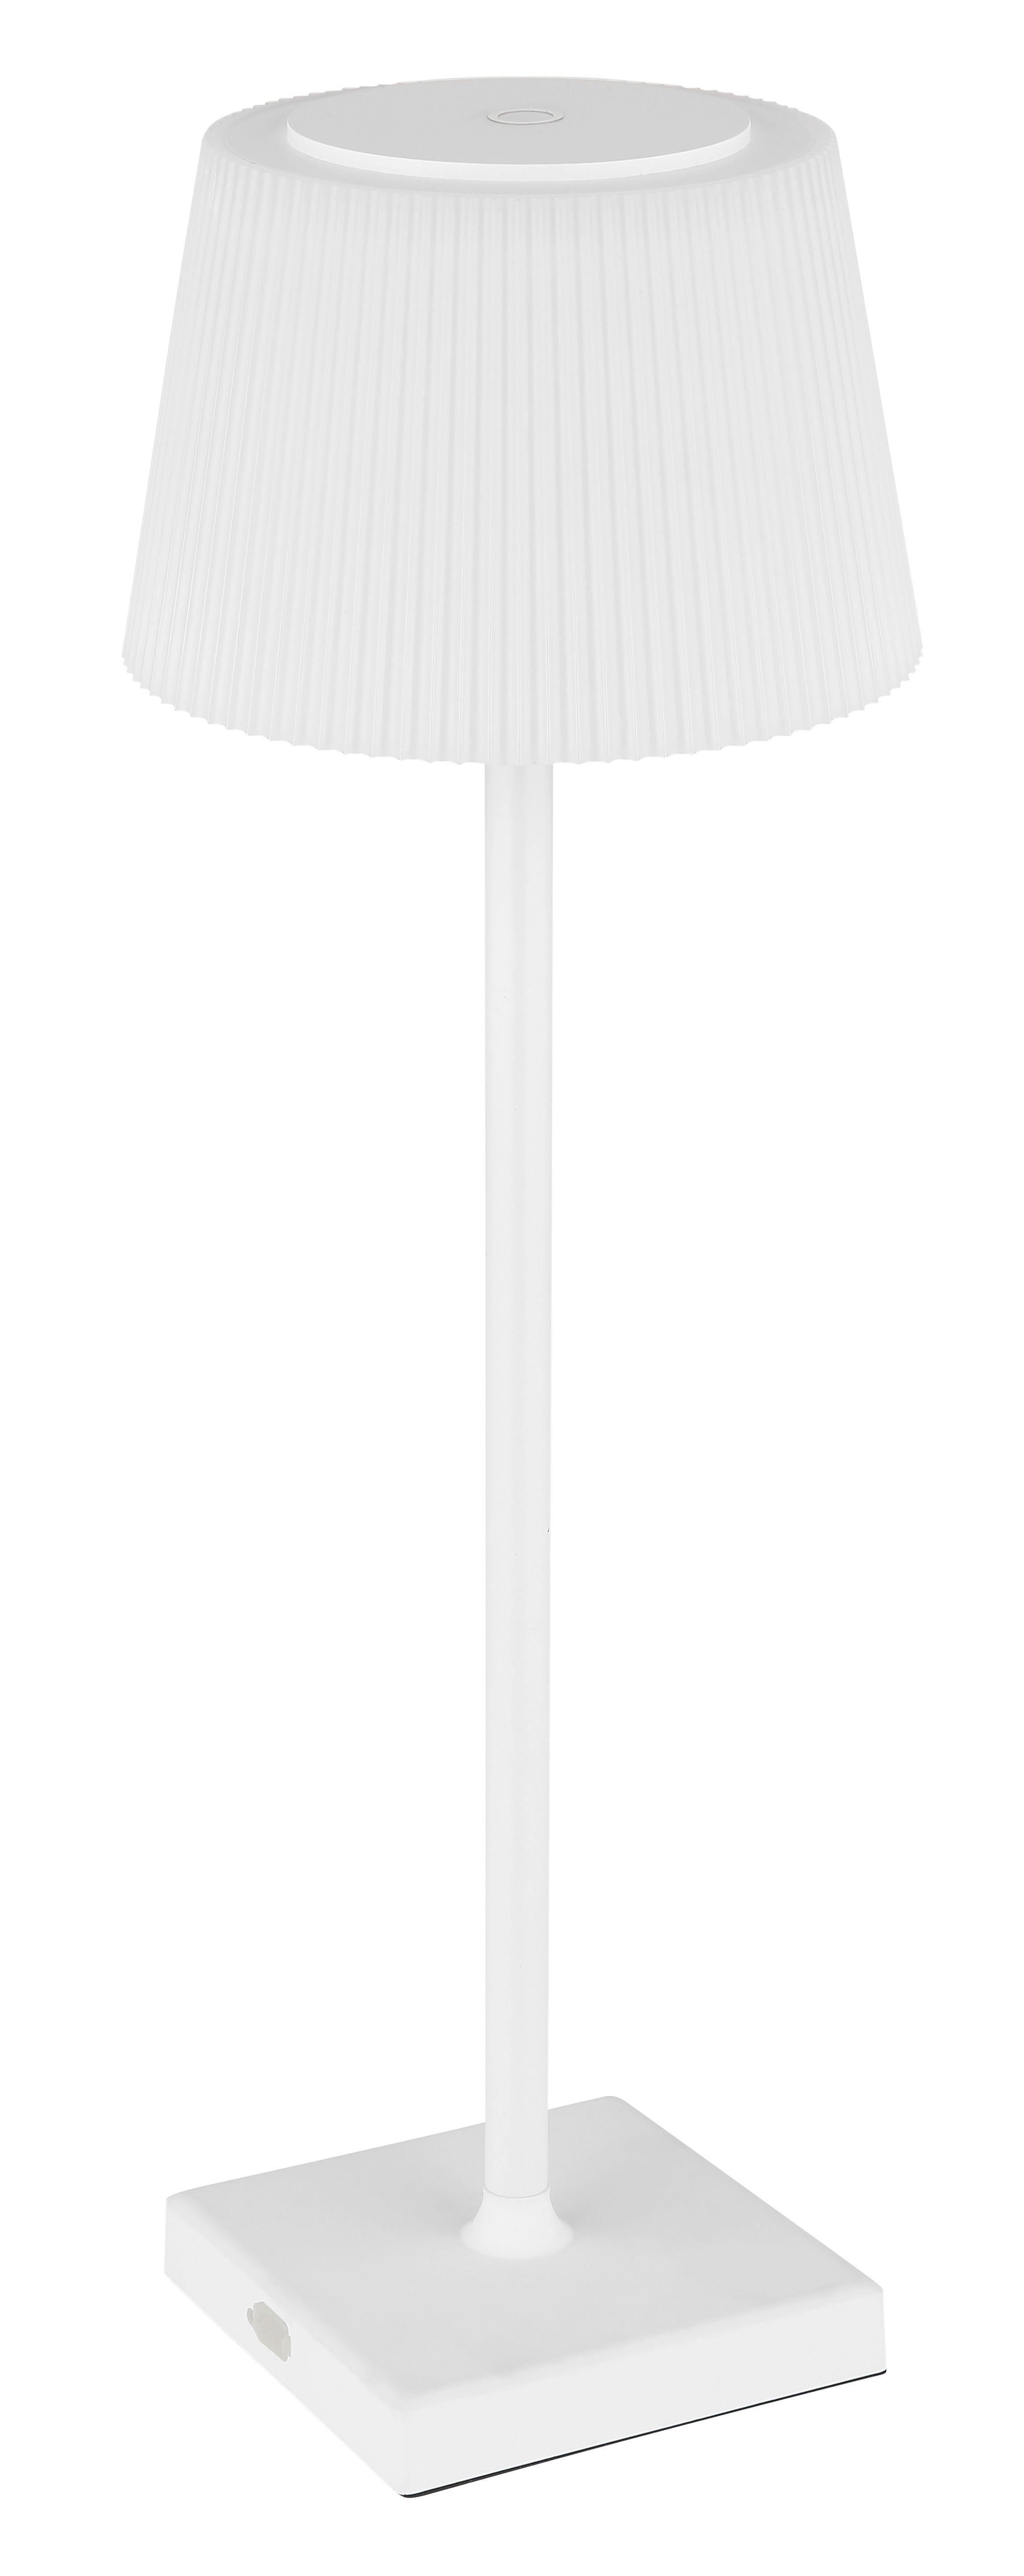 LED-TISCHLEUCHTE 13,1/38 cm   - Weiß, Basics, Kunststoff/Metall (13,1/38cm) - Globo